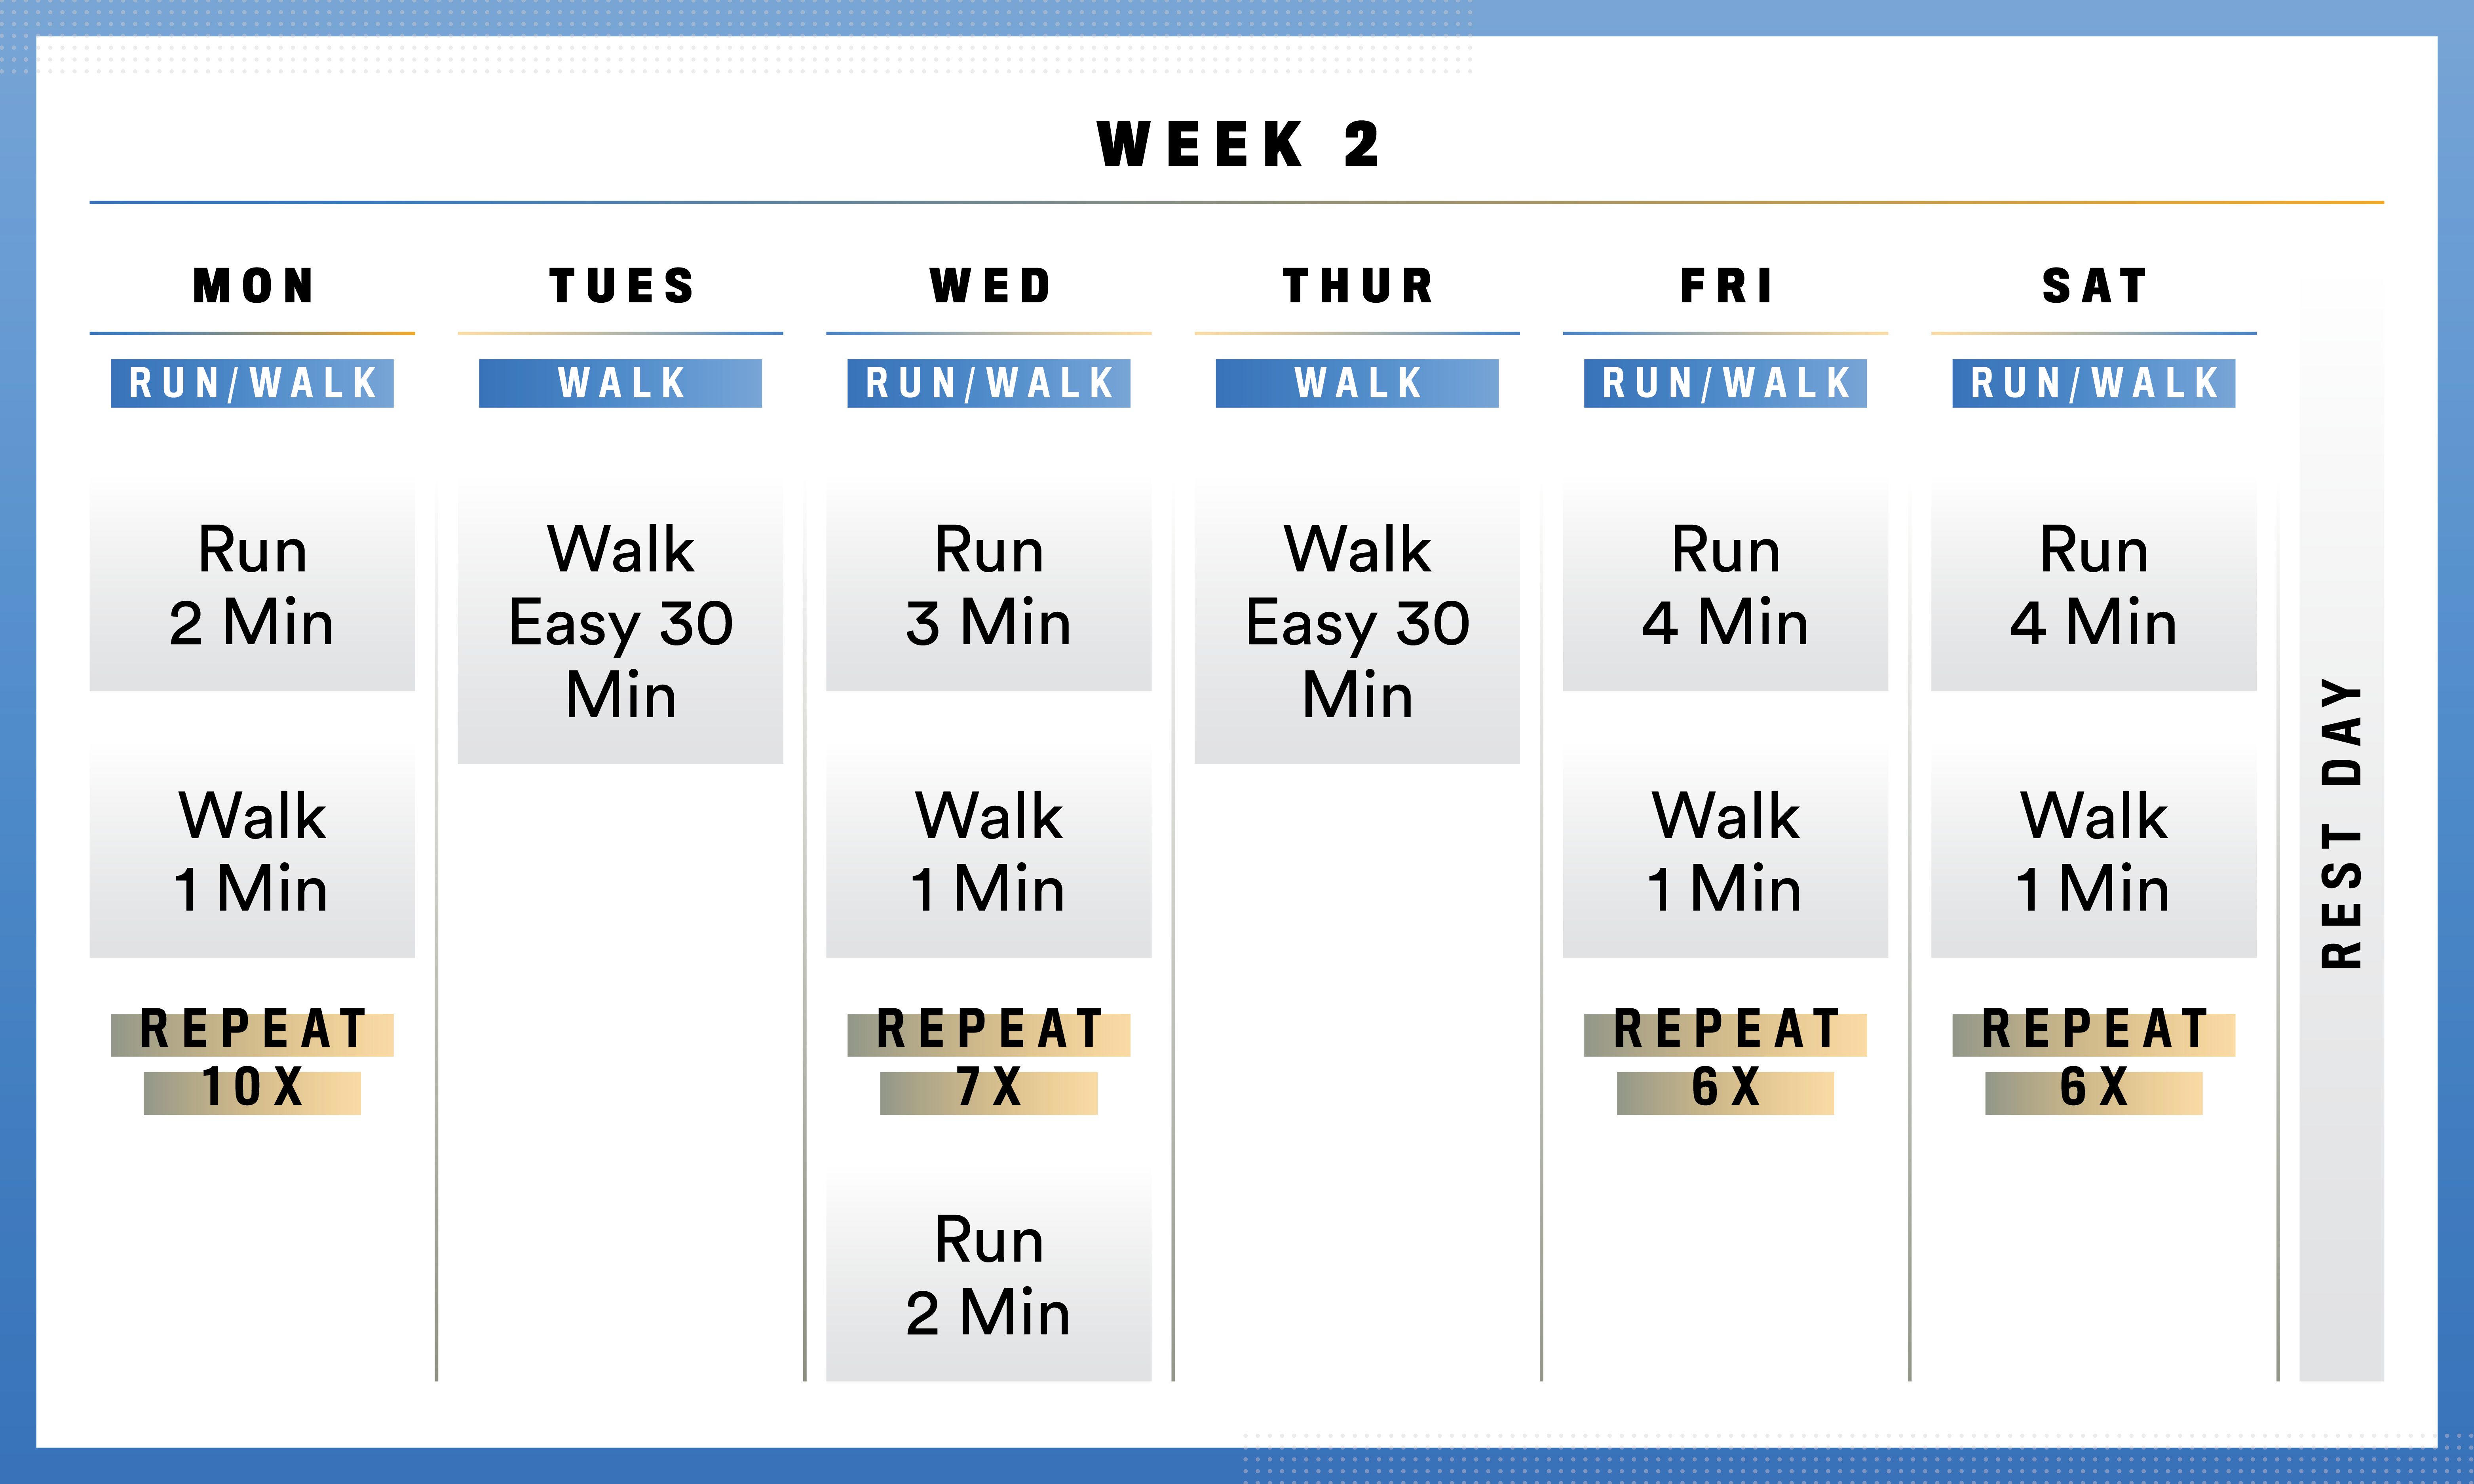 Walk-to-Run Program - Learn to Run Safely in 8 Weeks